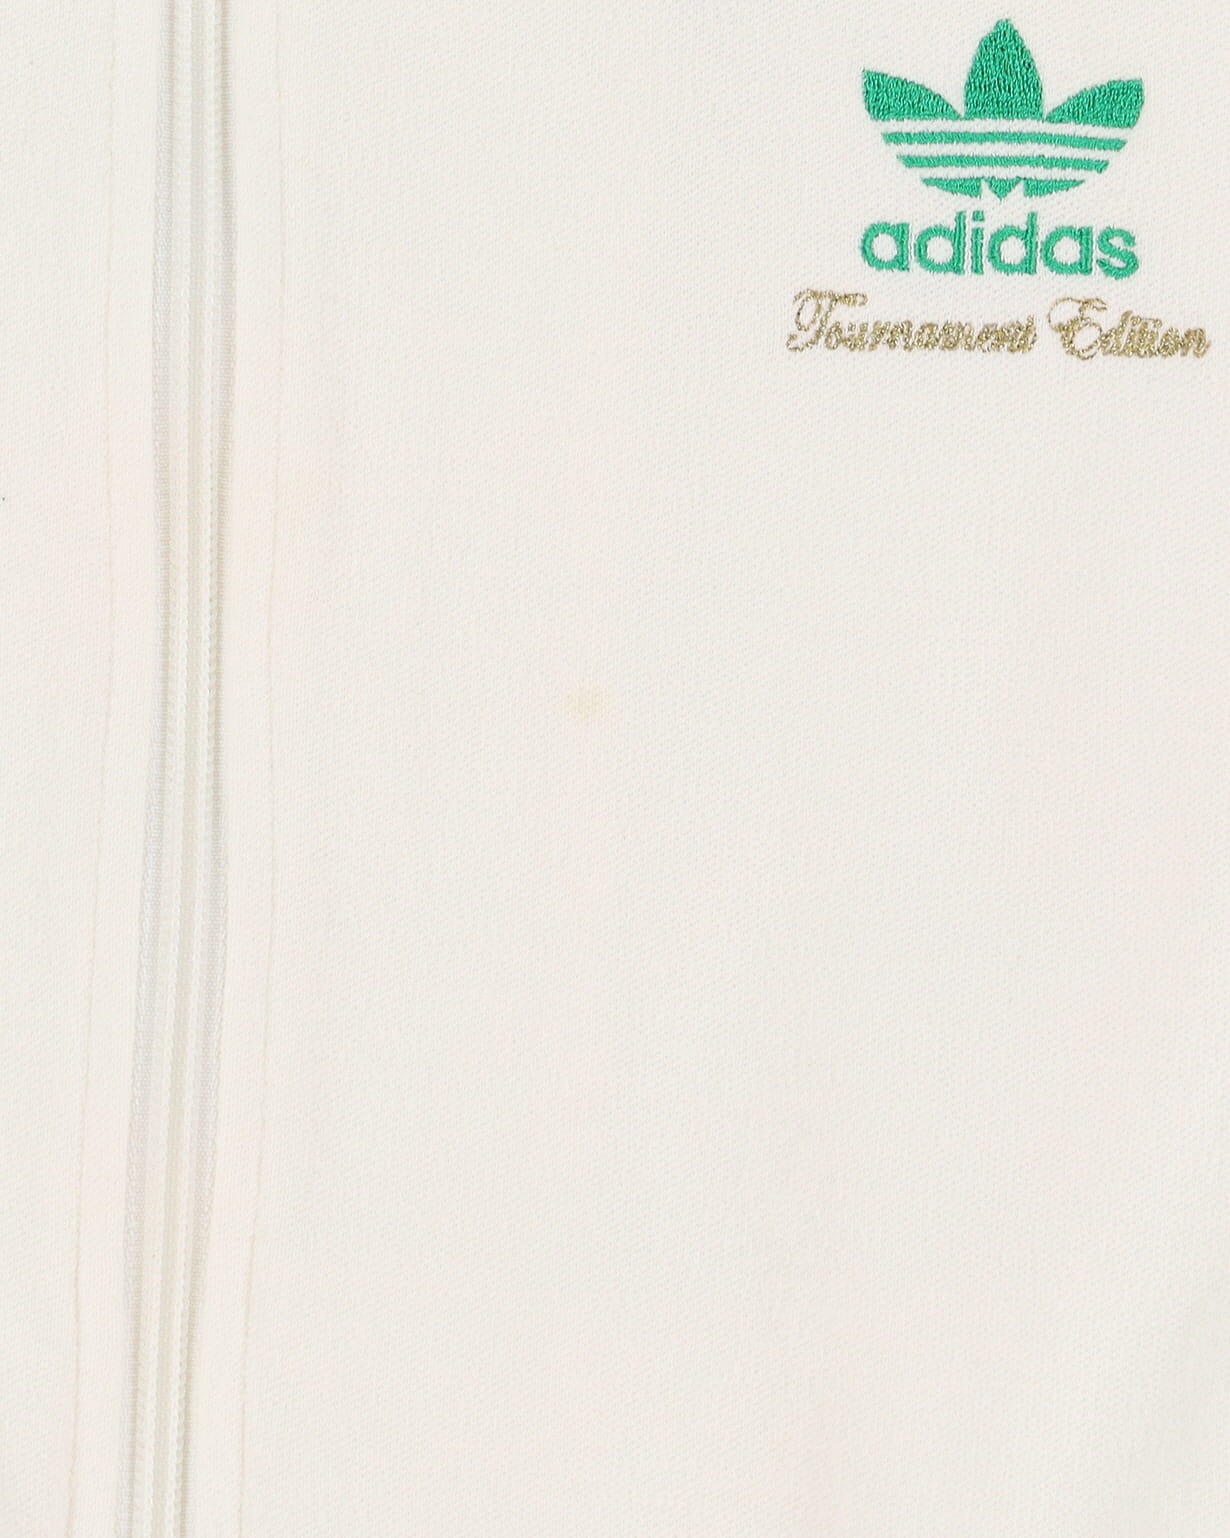 00s Adidas Tournament Edition White Full-Zip Track Jacket - S